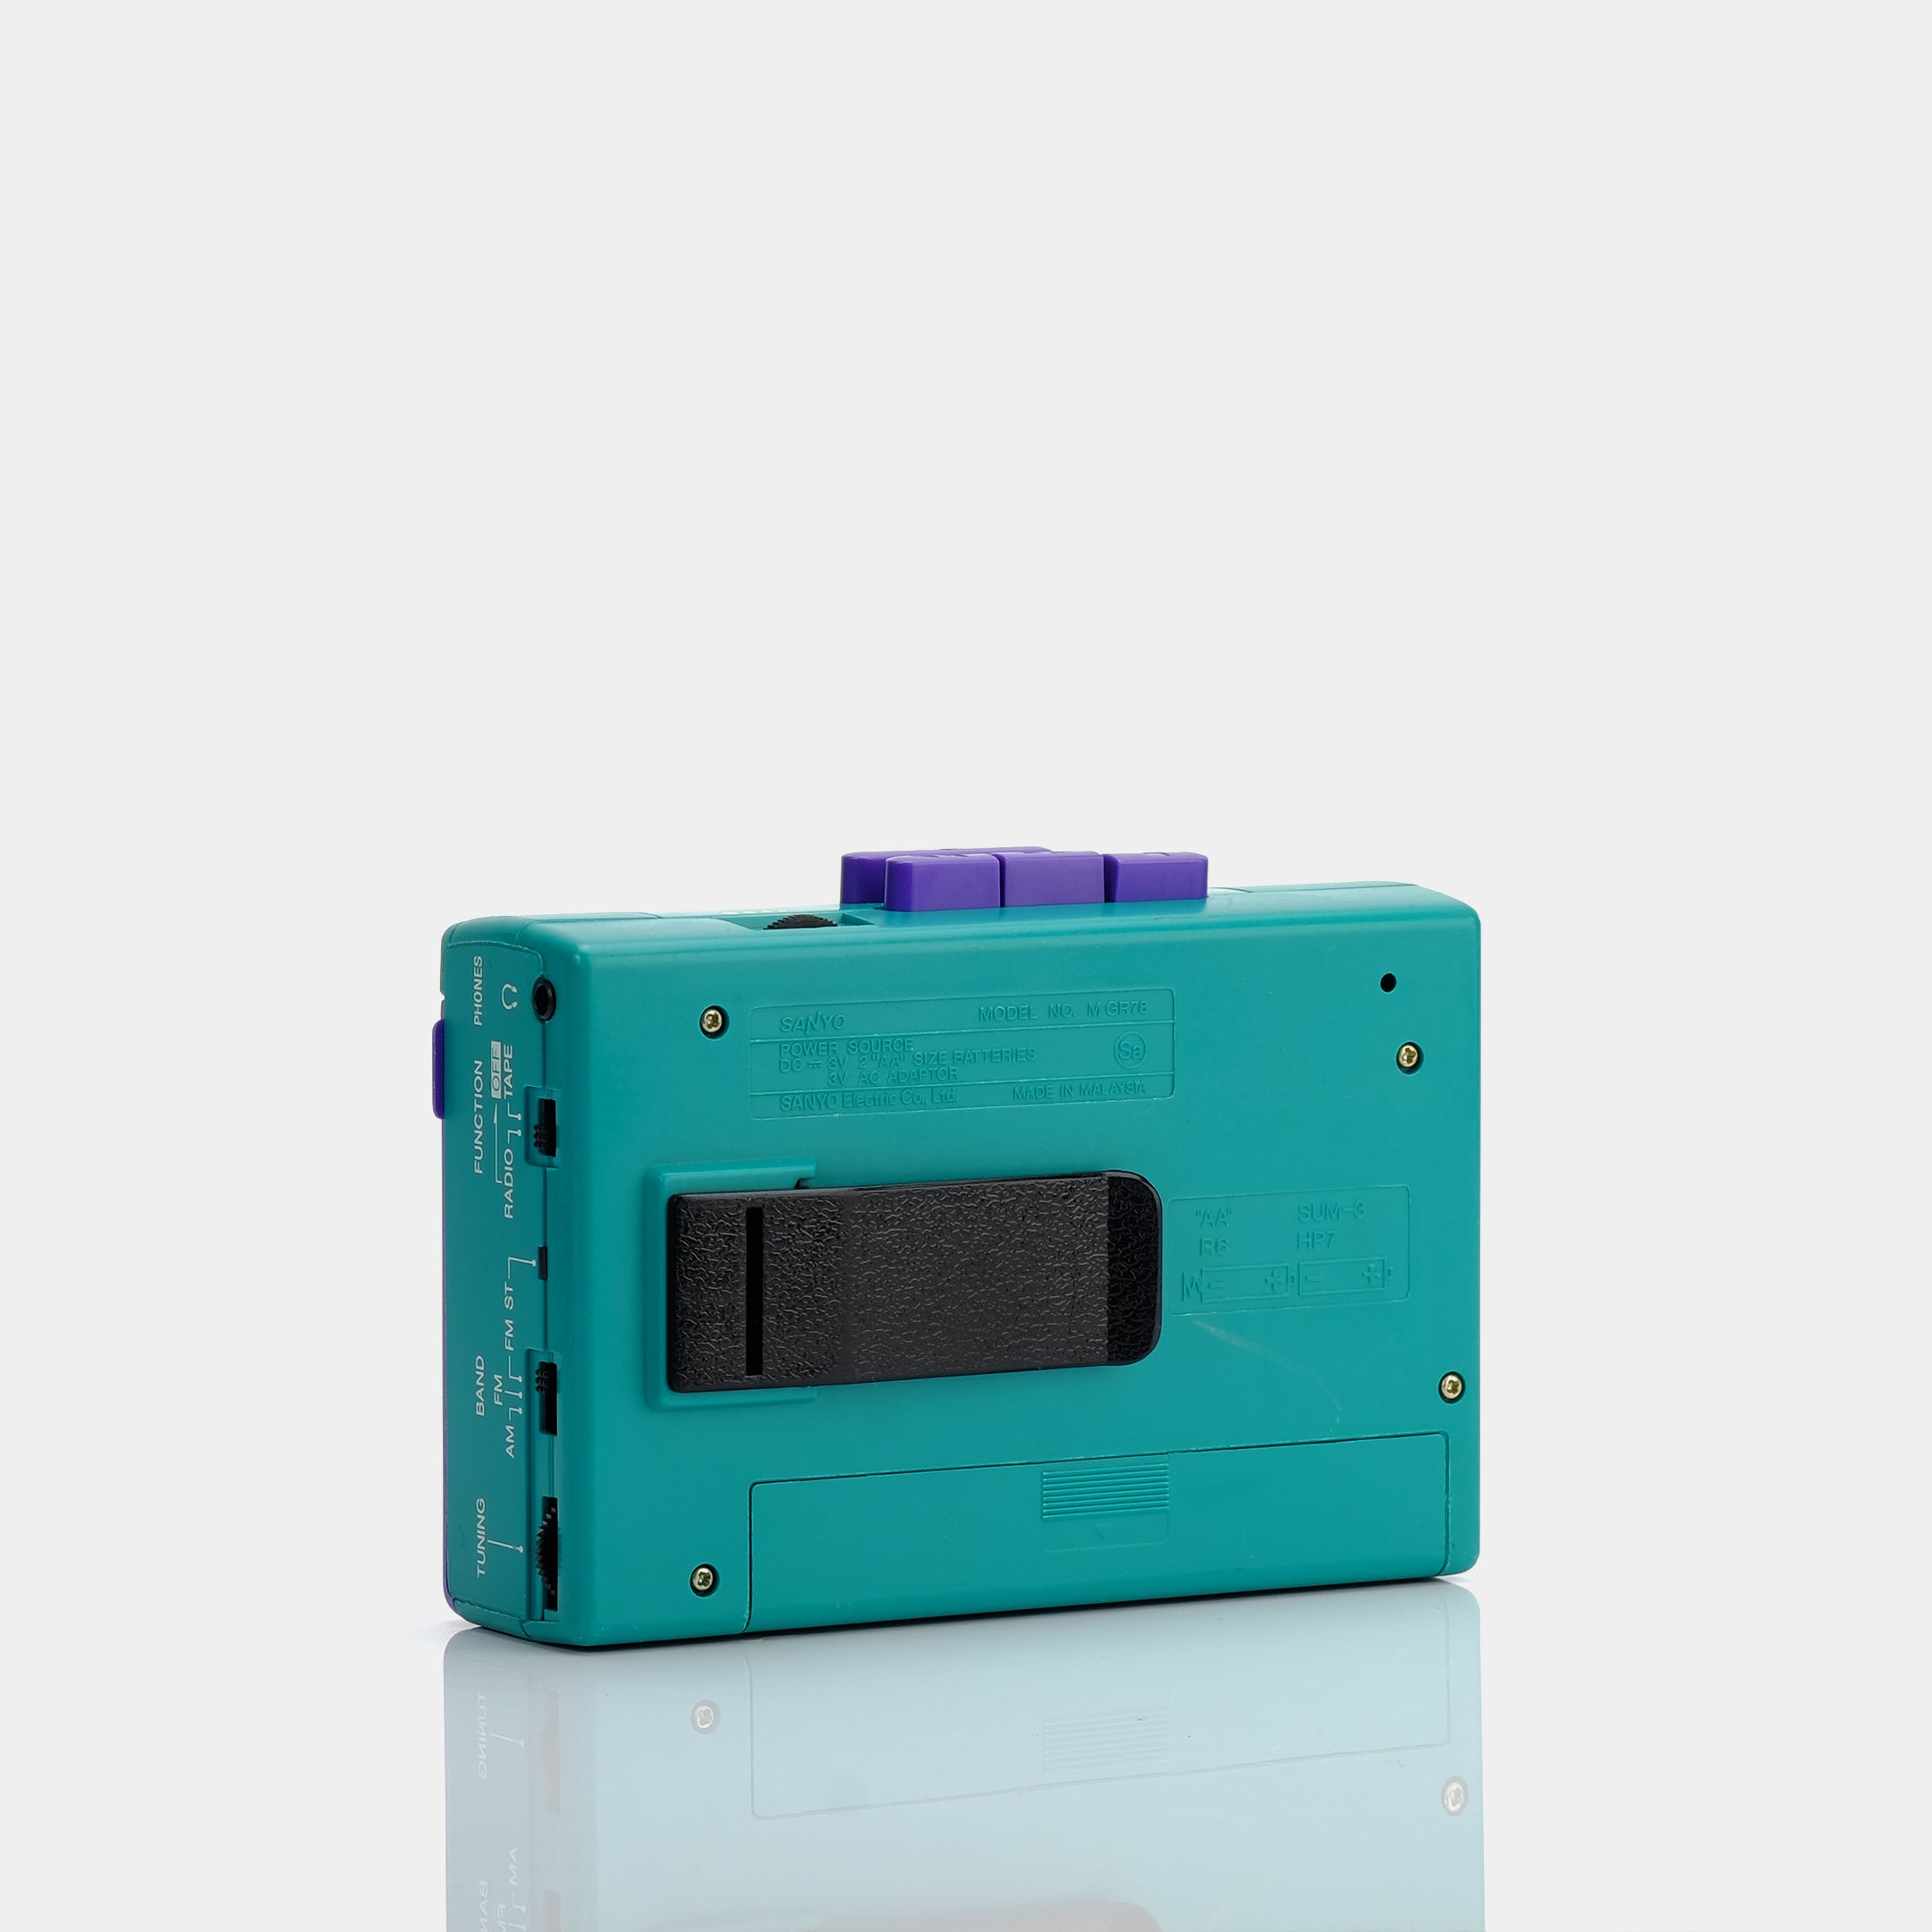 Sanyo MGR78 AM/FM Portable Cassette Player